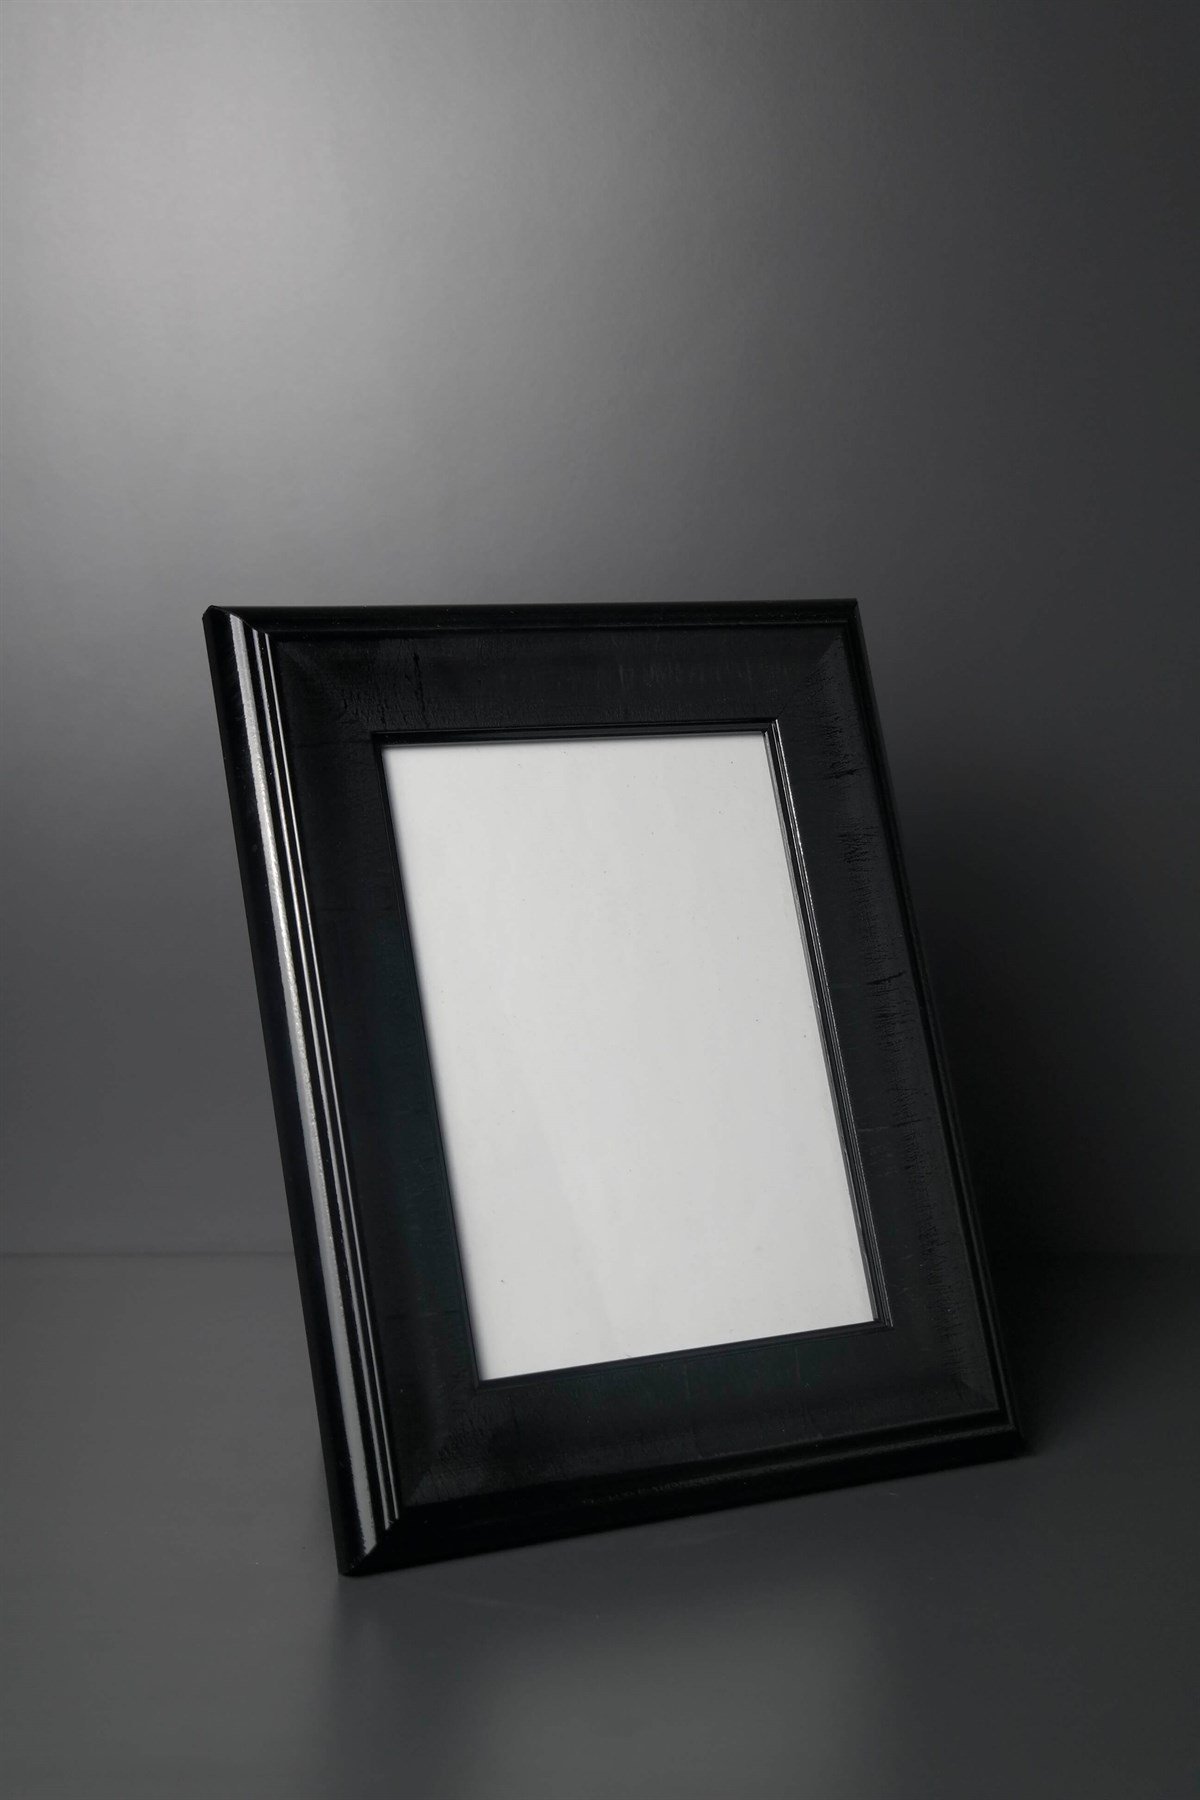 Siyah Mat Ahşap Resim Çerçevesi 20x25 Cm Fiyatları | Joy Home Accessories